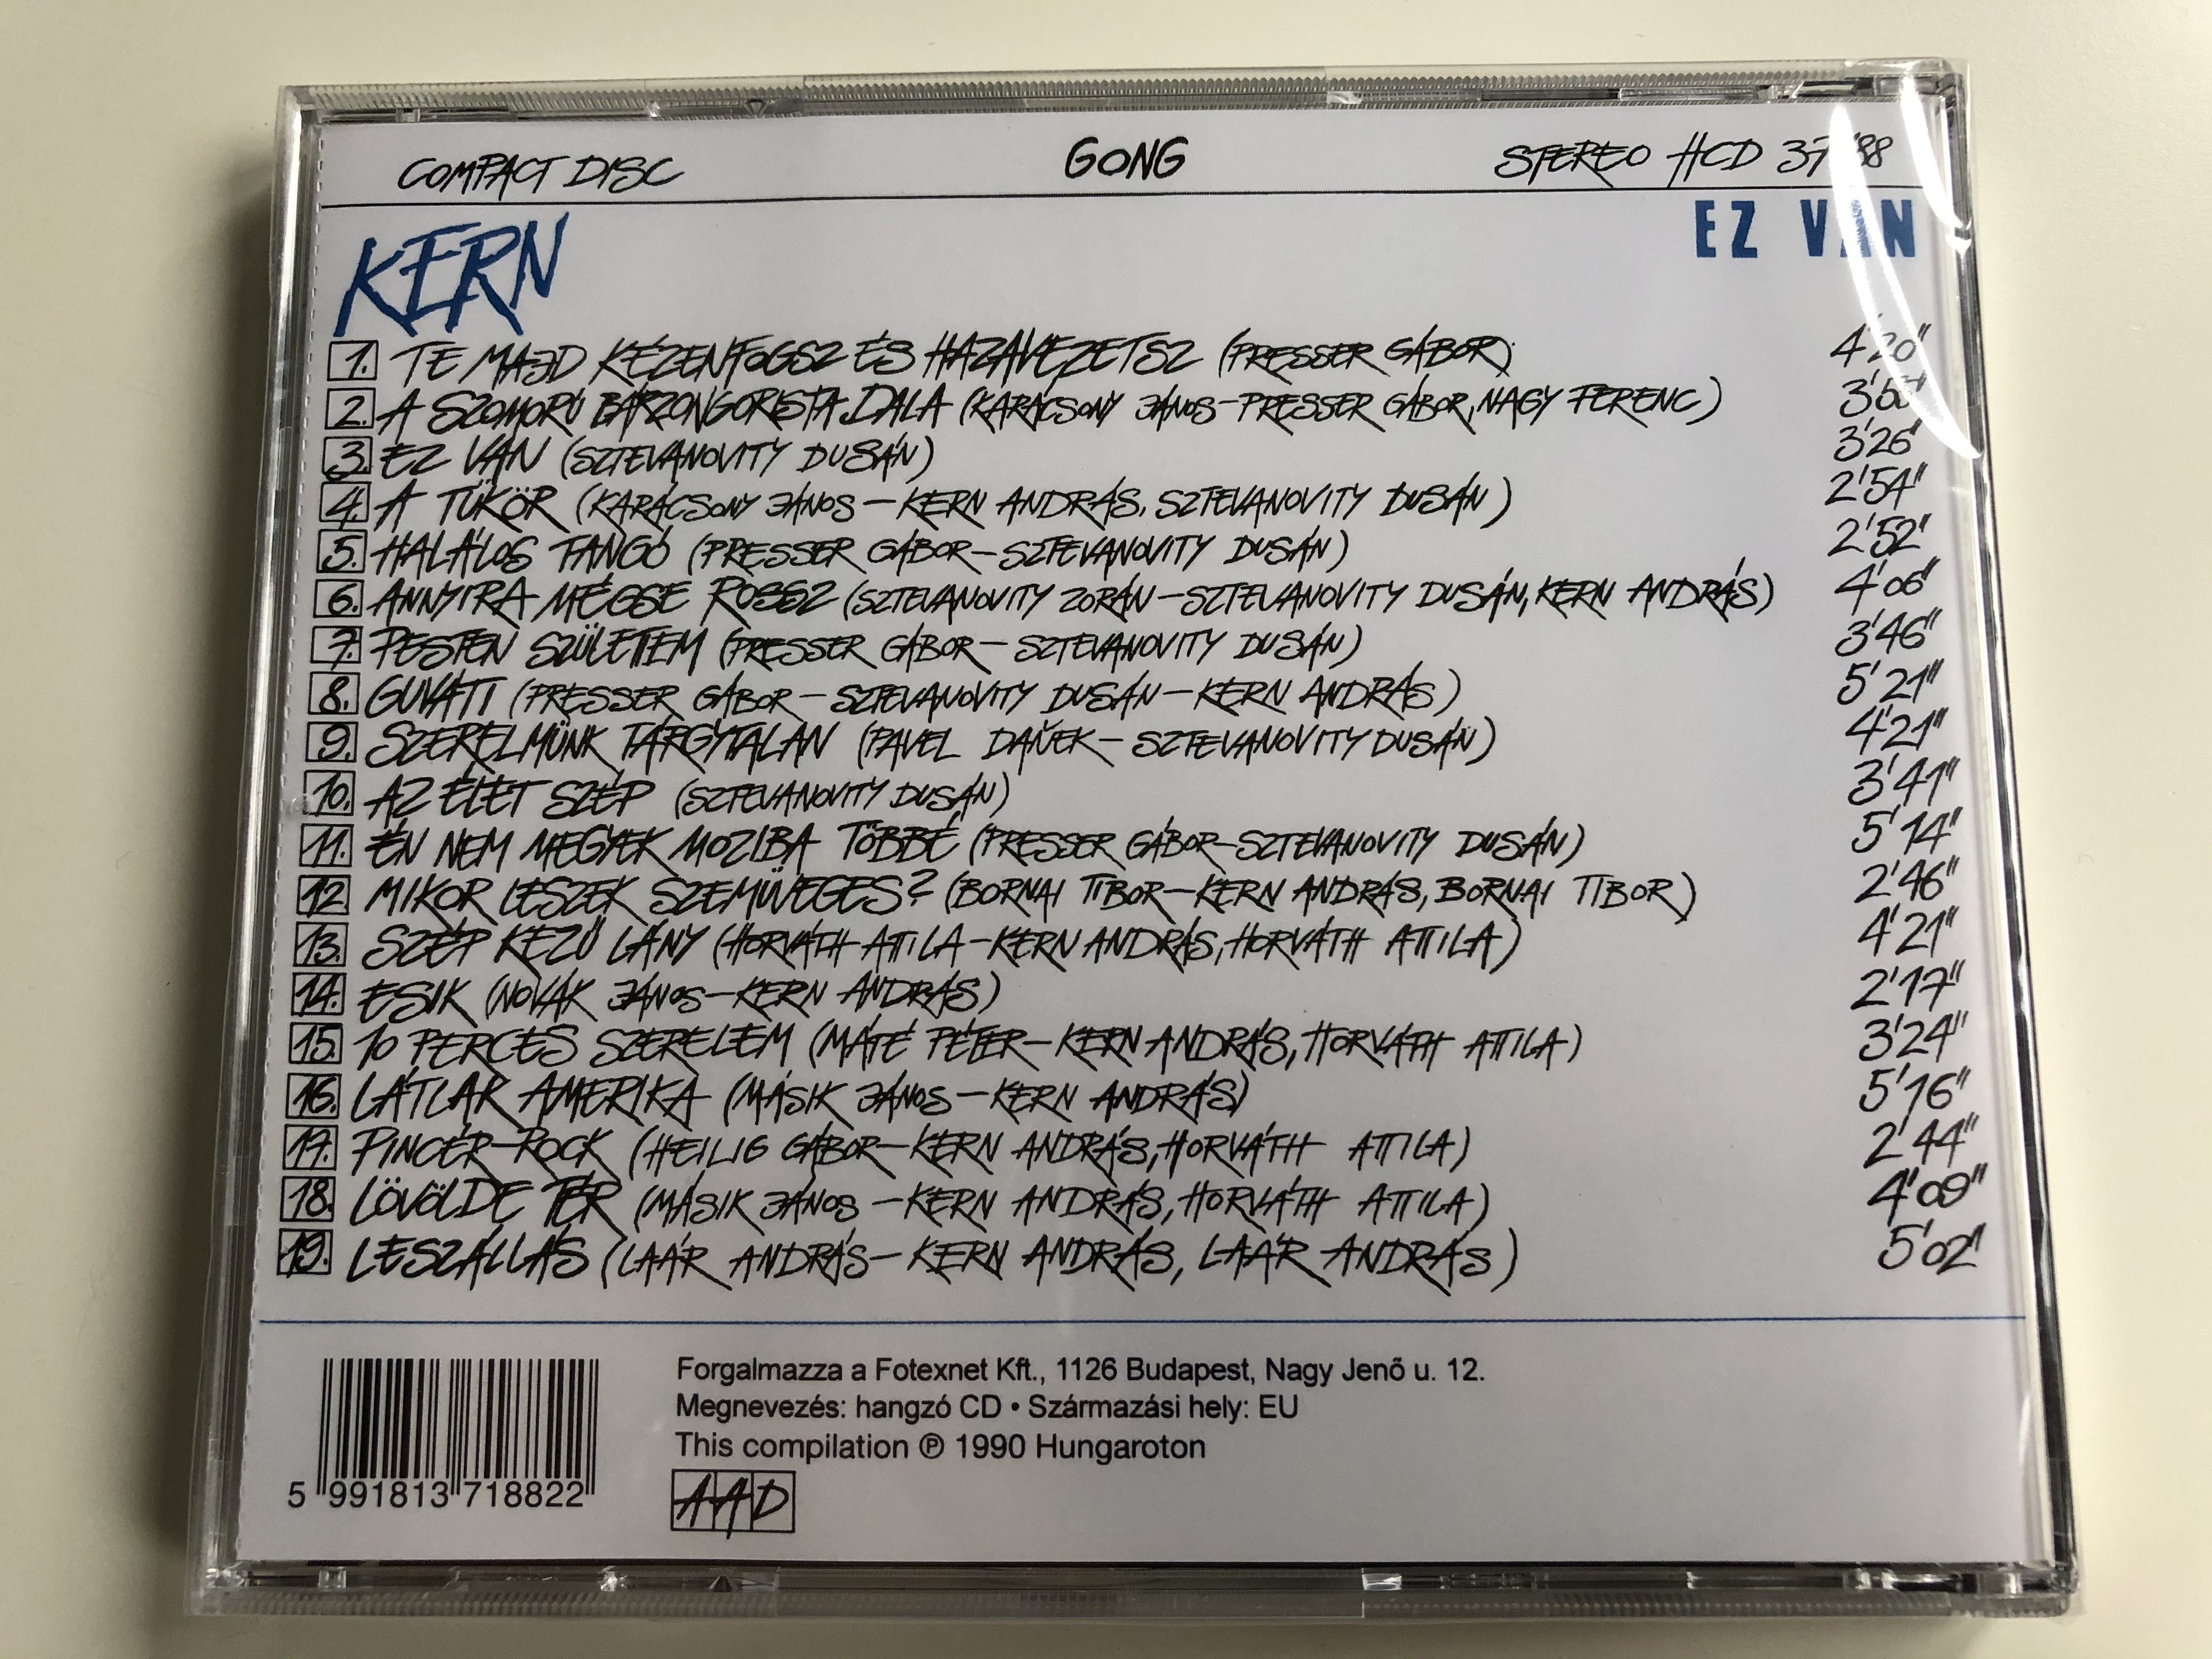 kern-andr-s-ez-van-gong-audio-cd-1990-stereo-hcd-37188-2-.jpg